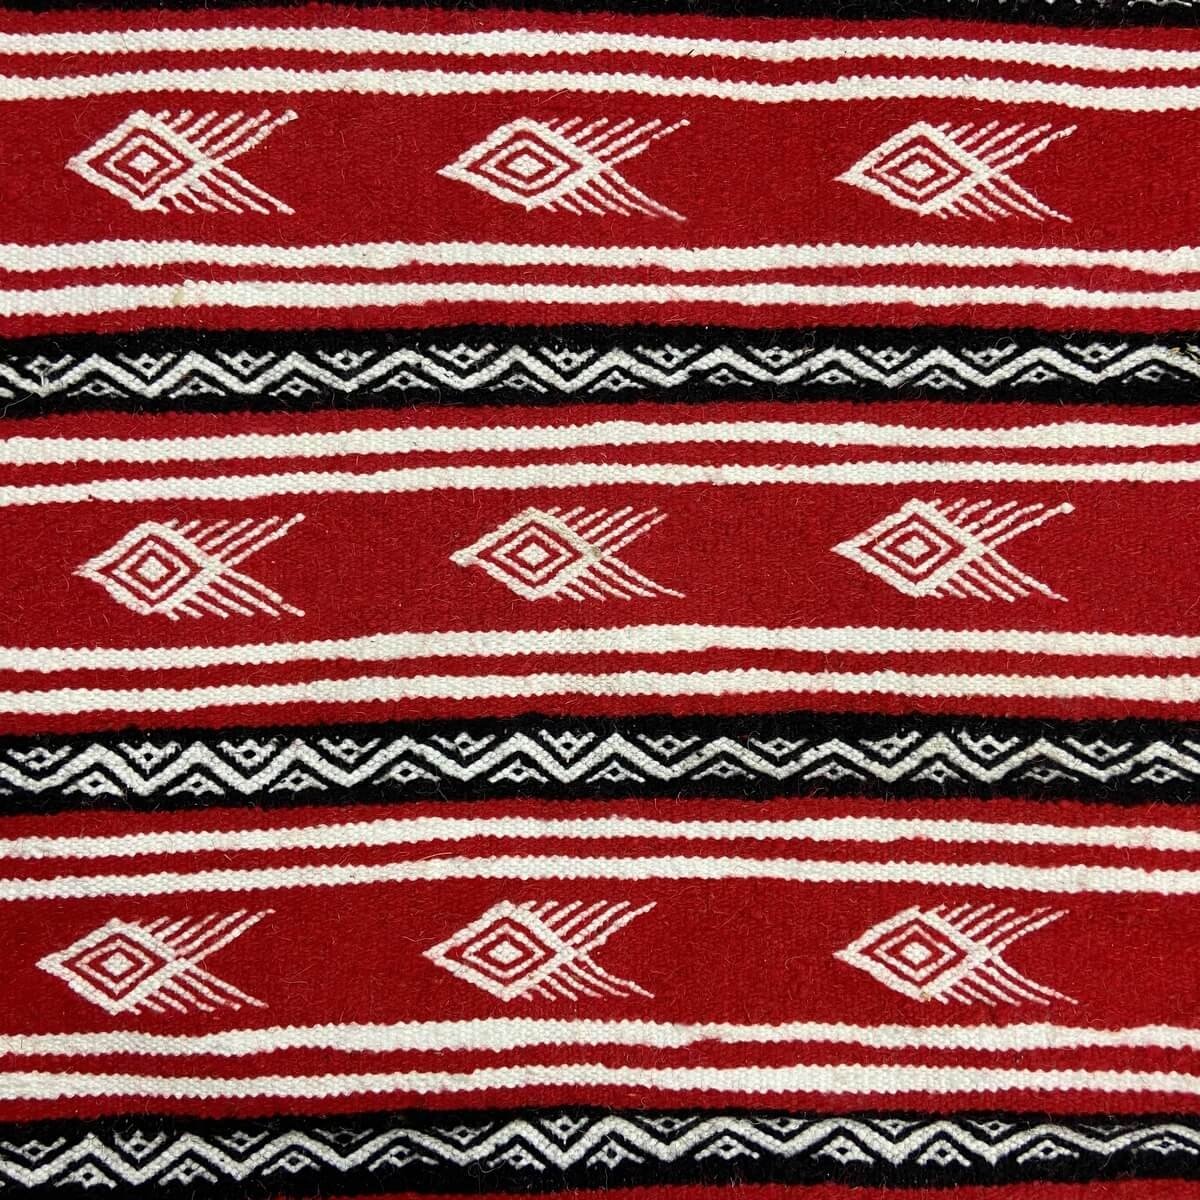 Berber tapijt Tapijt Kilim Danbelu 72x120 Rood (Handgeweven, Wol, Tunesië) Tunesisch kilimdeken, Marokkaanse stijl. Rechthoekig 